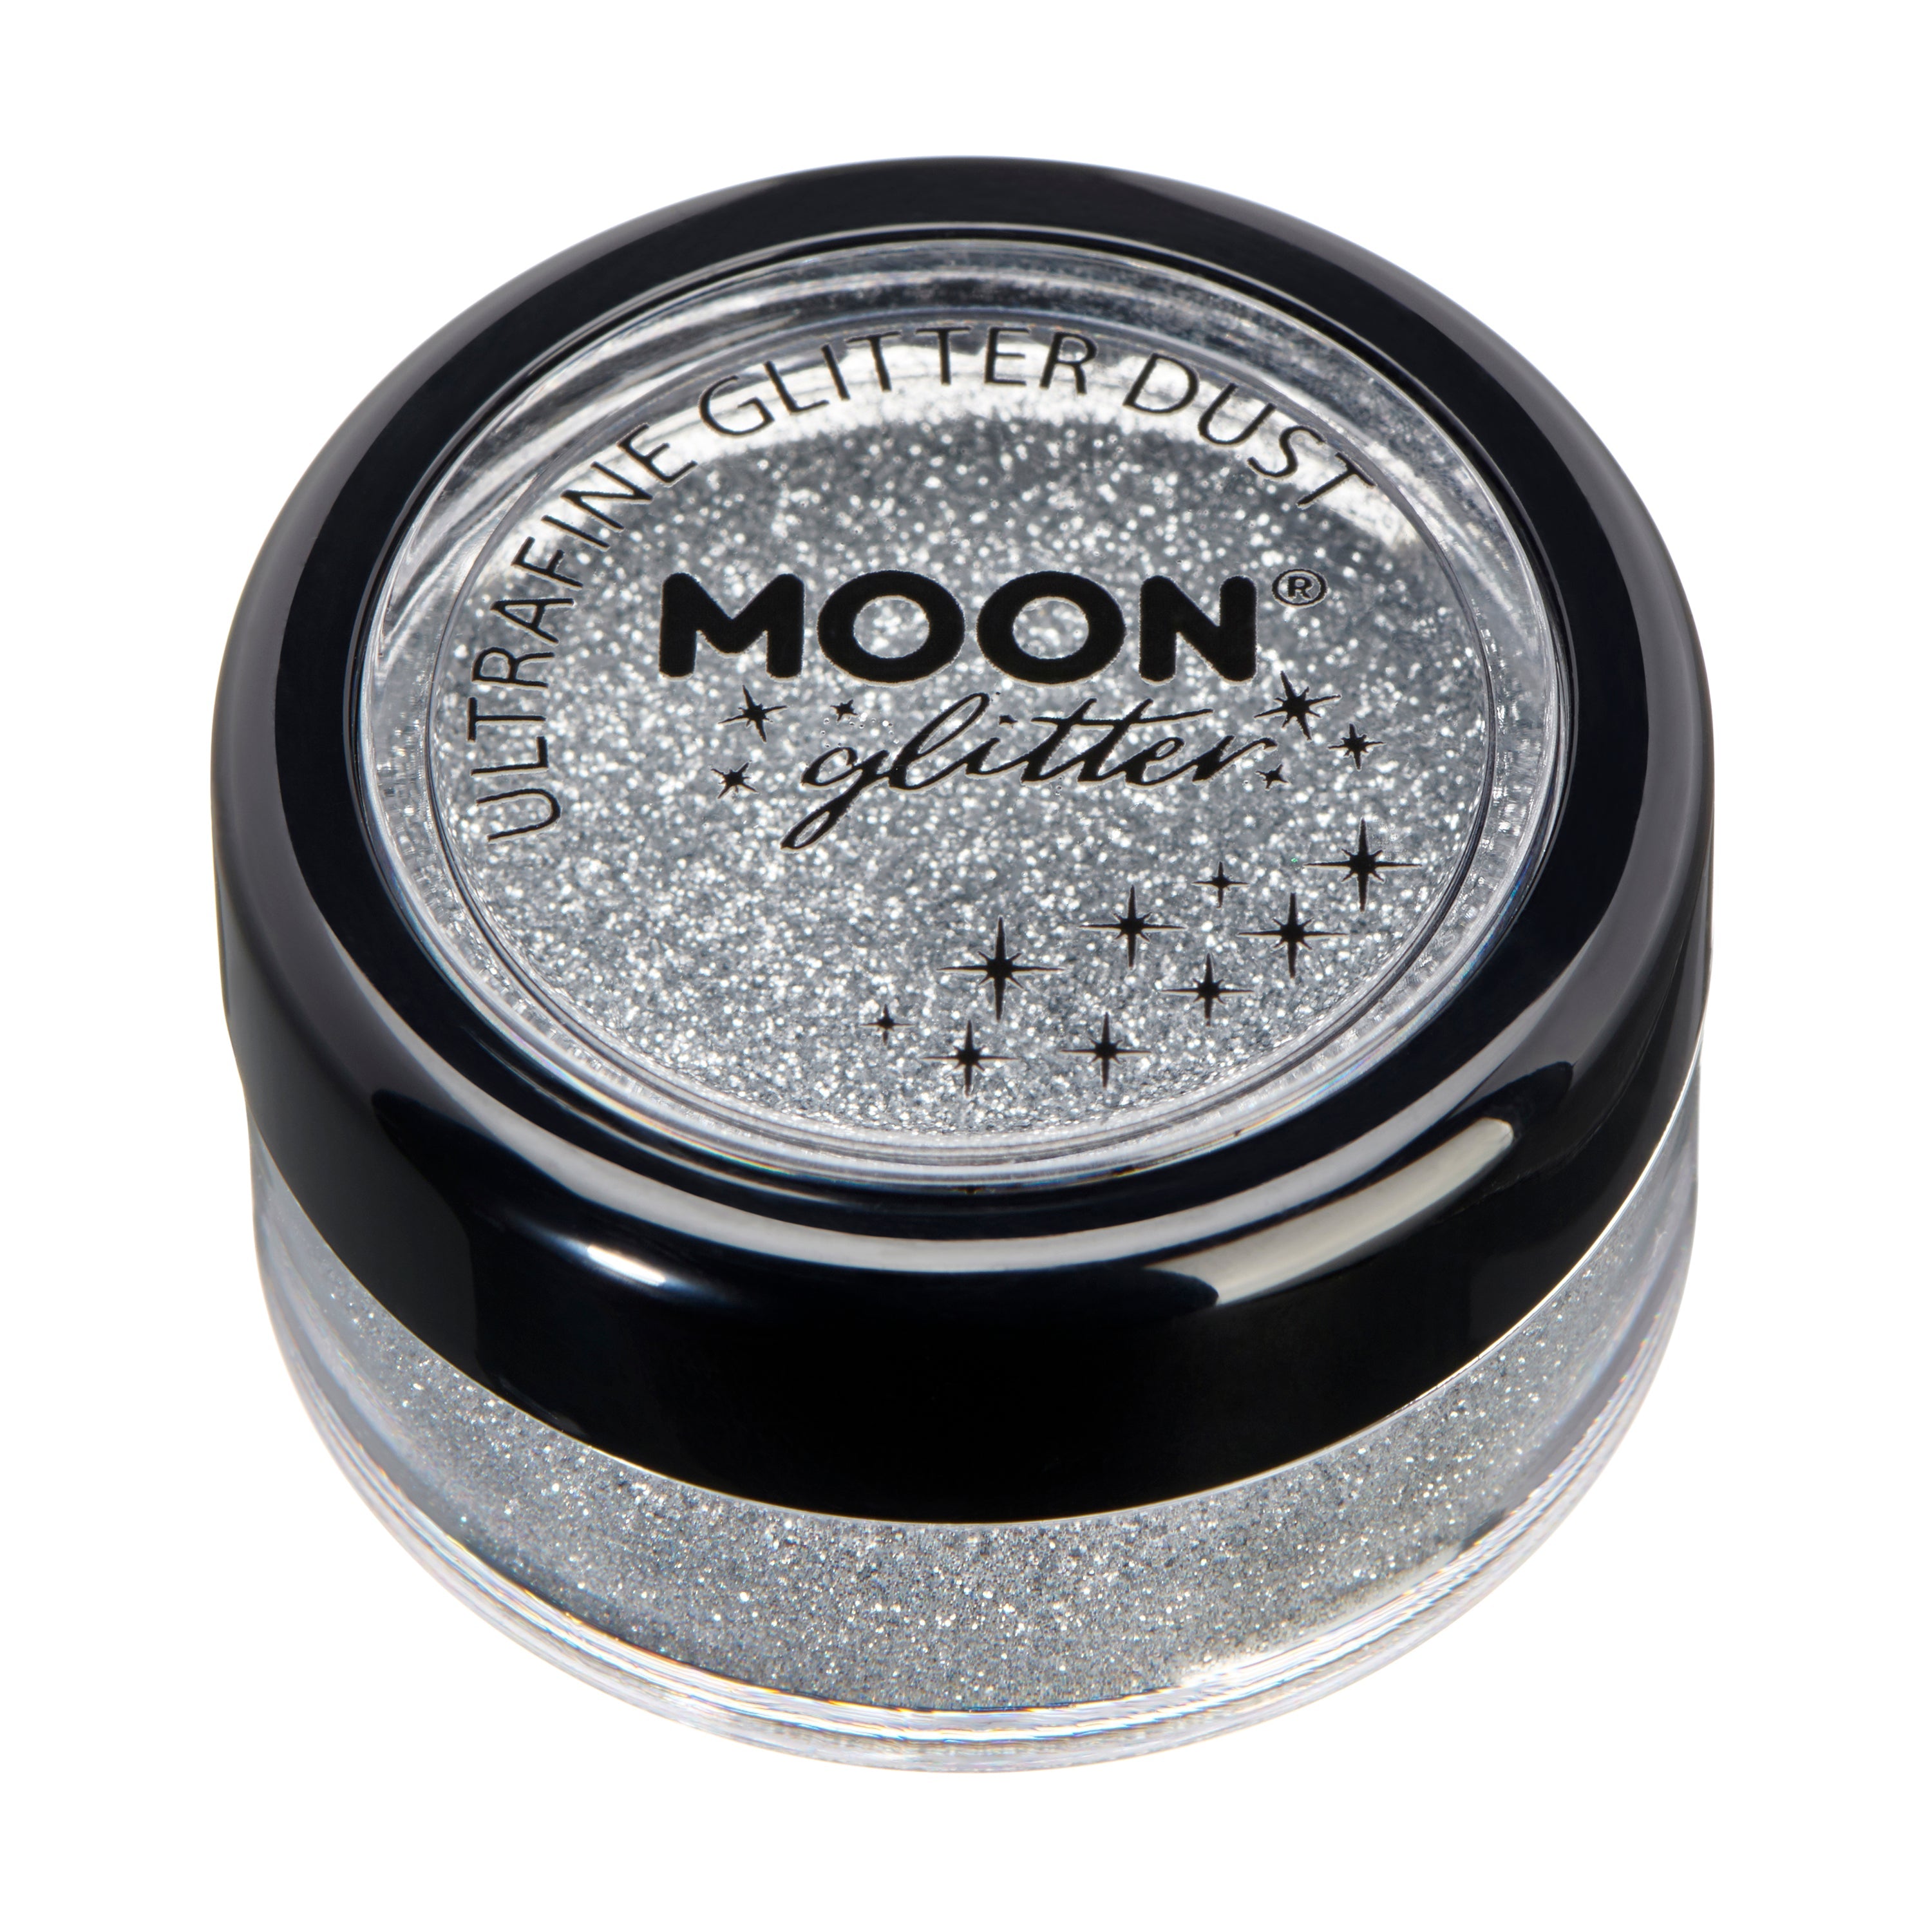 Ultrafine Face & Glitter Dust by Moon Face & Body Glitter – Moon Fun Makeup